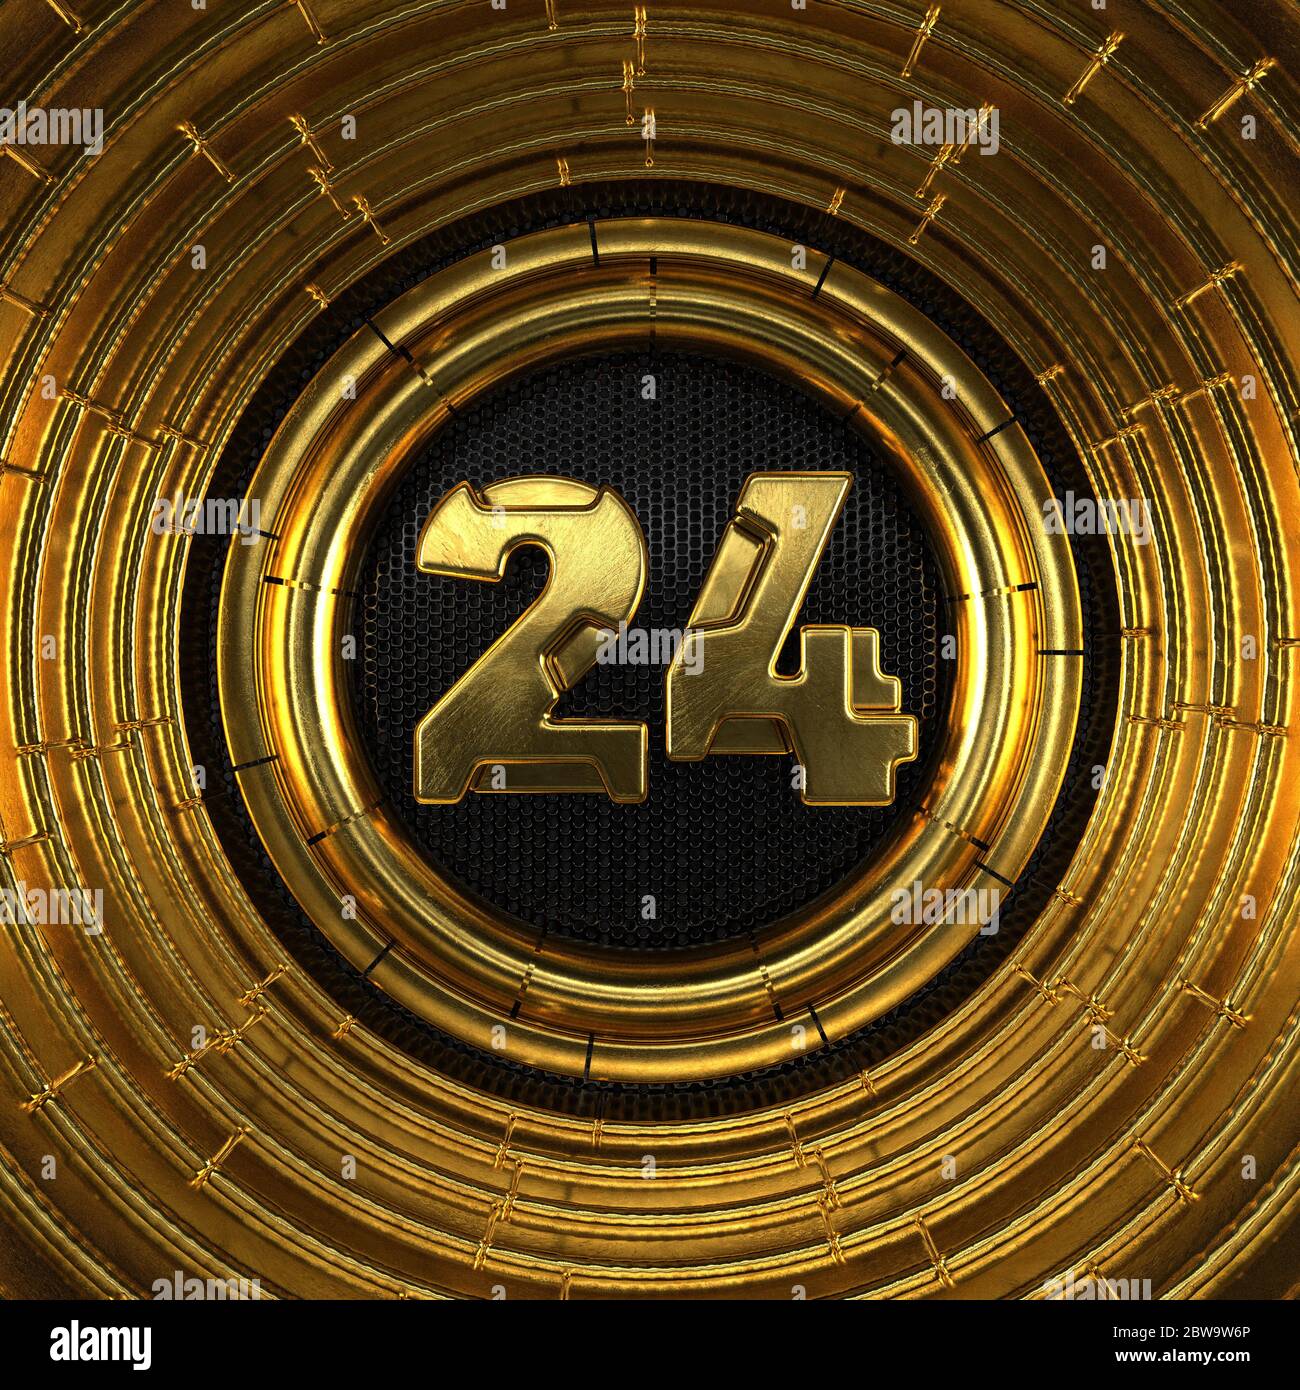 Number 24 Interlocked Gold 3d Illustration Stock Illustration